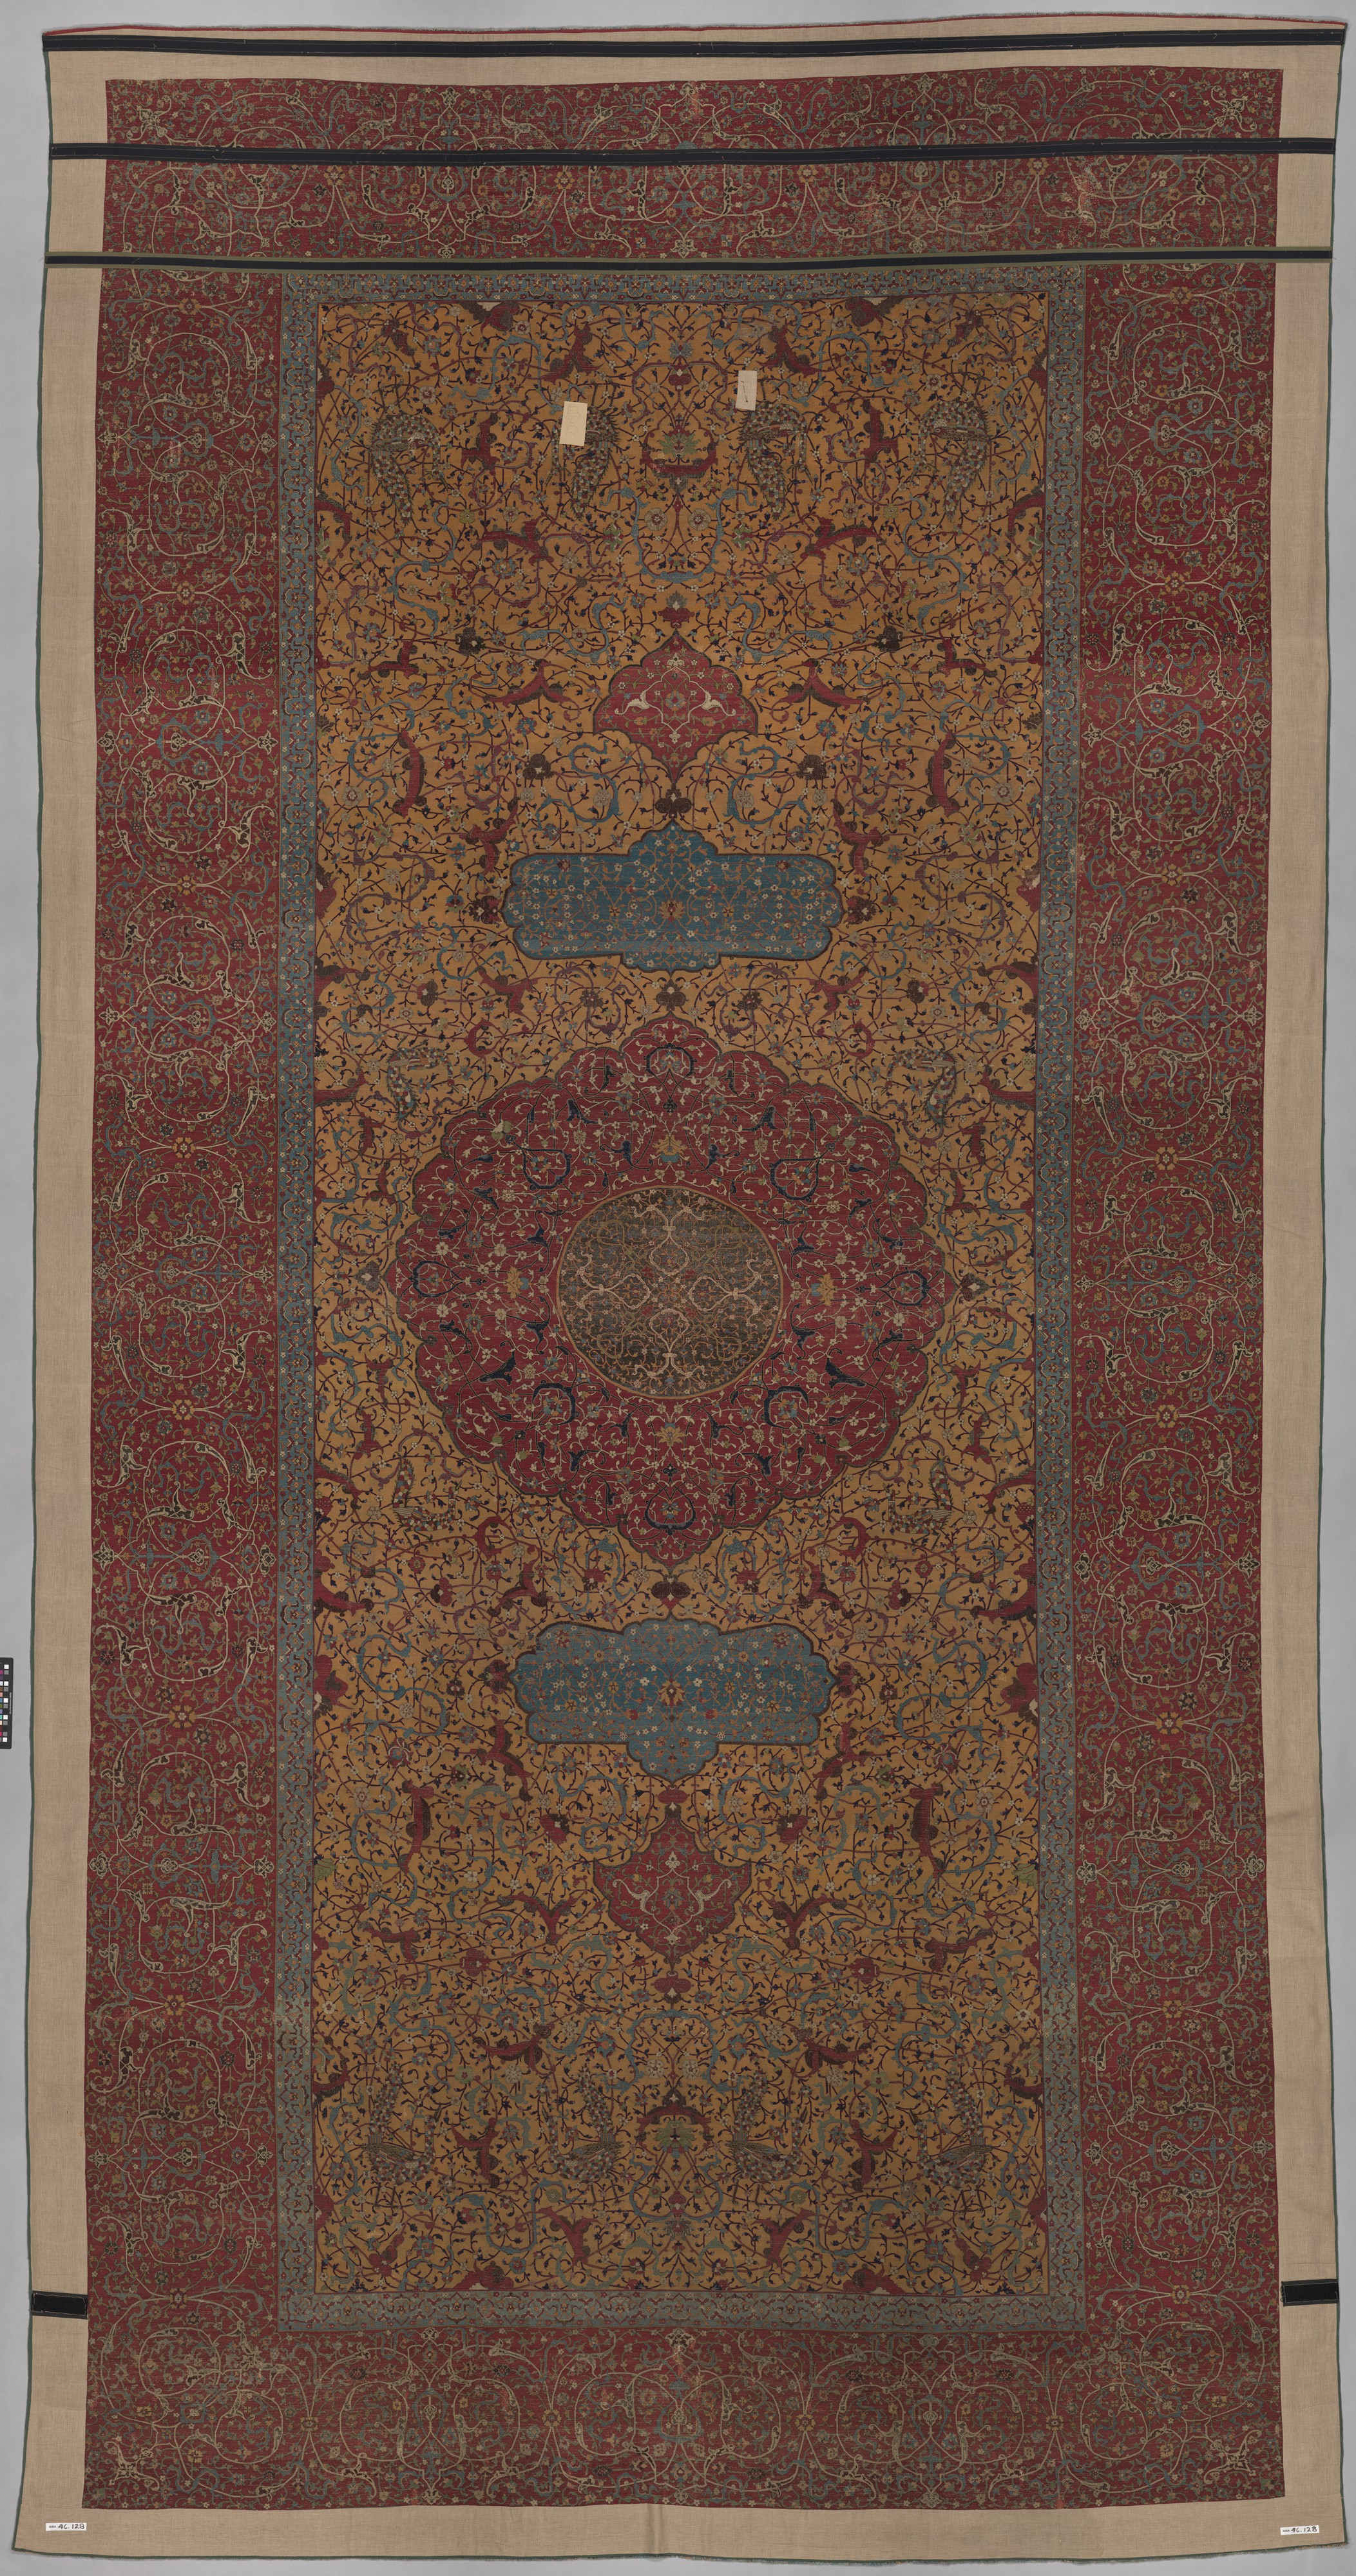 The Anhalt Medallion Carpet | The Metropolitan Museum of Art